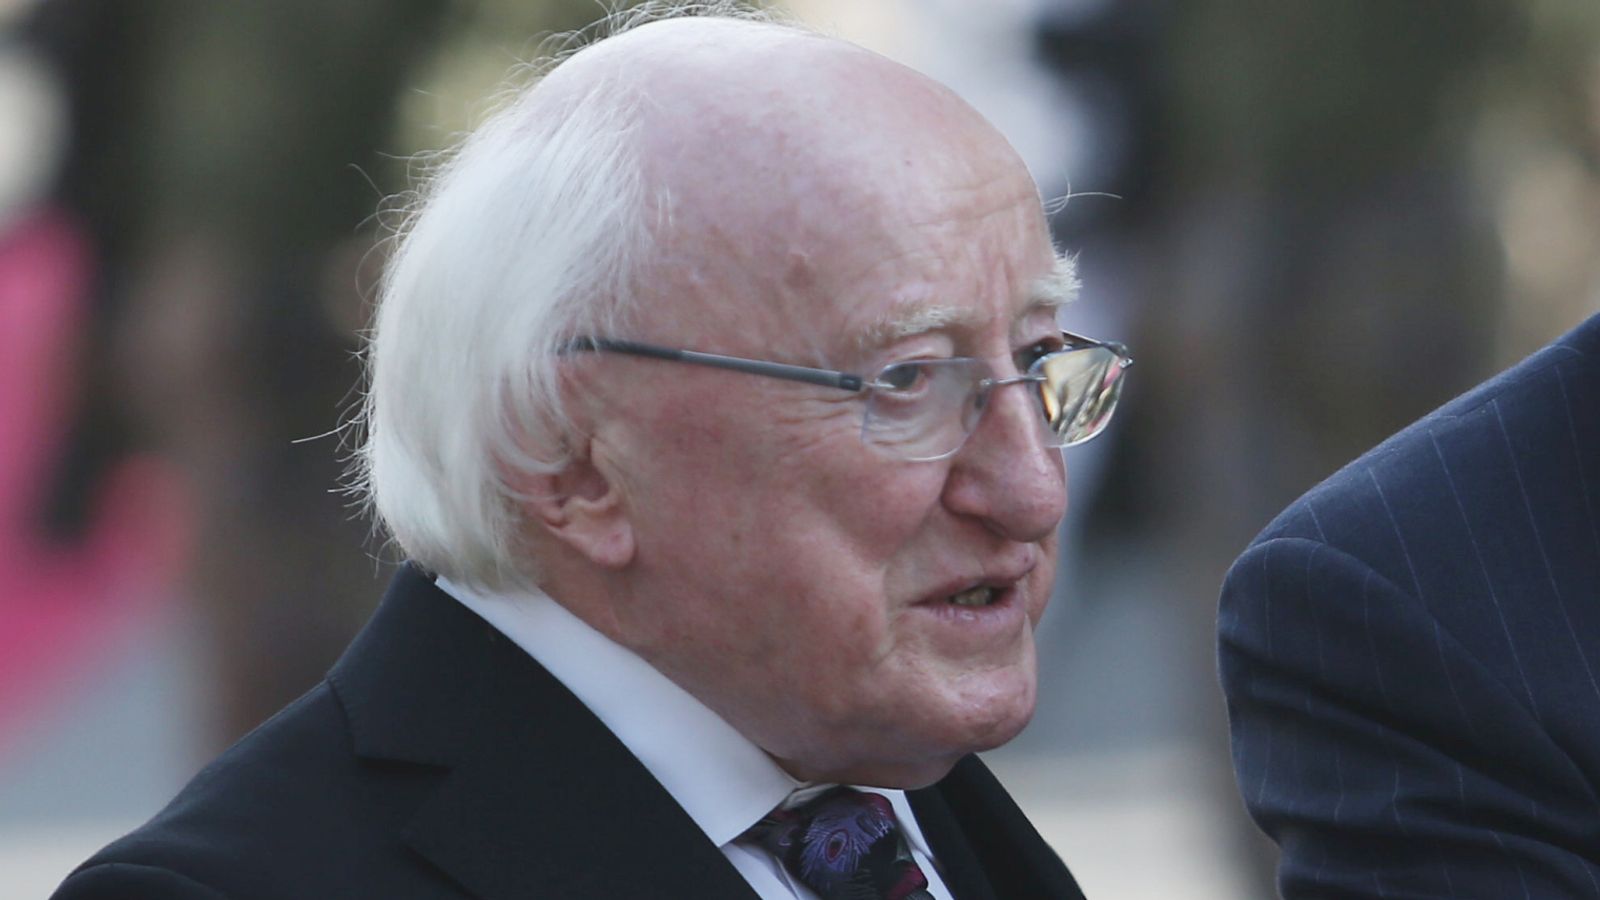 Michael D Higgins: Irish president makes Christmas plea on migration and climate change - Sky News